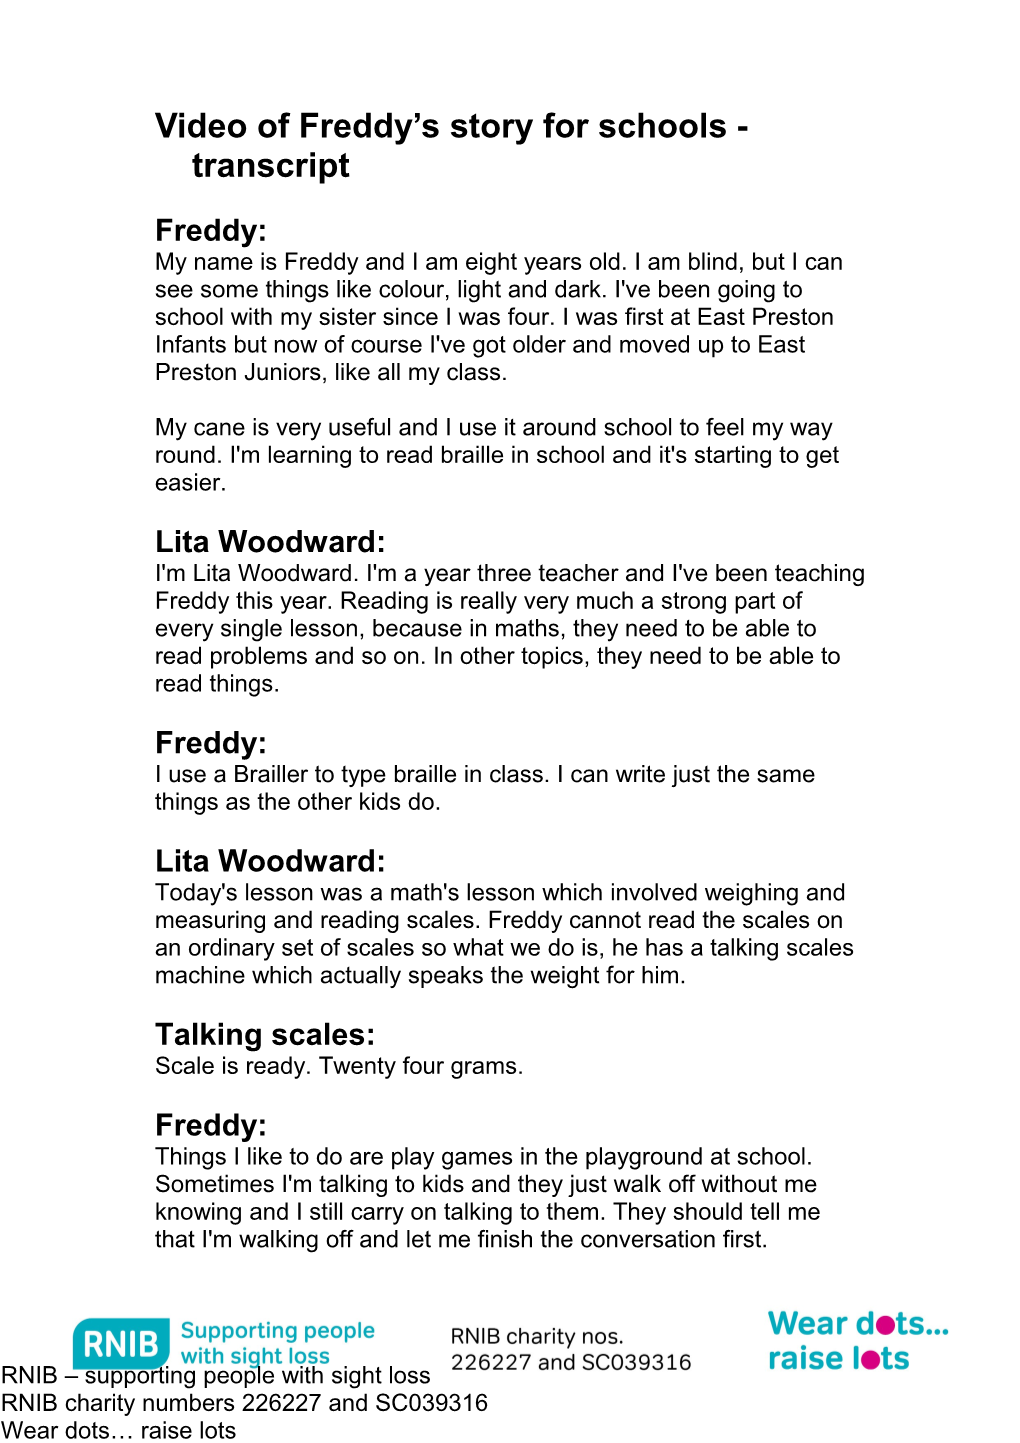 Video of Freddy S Story - Transcript